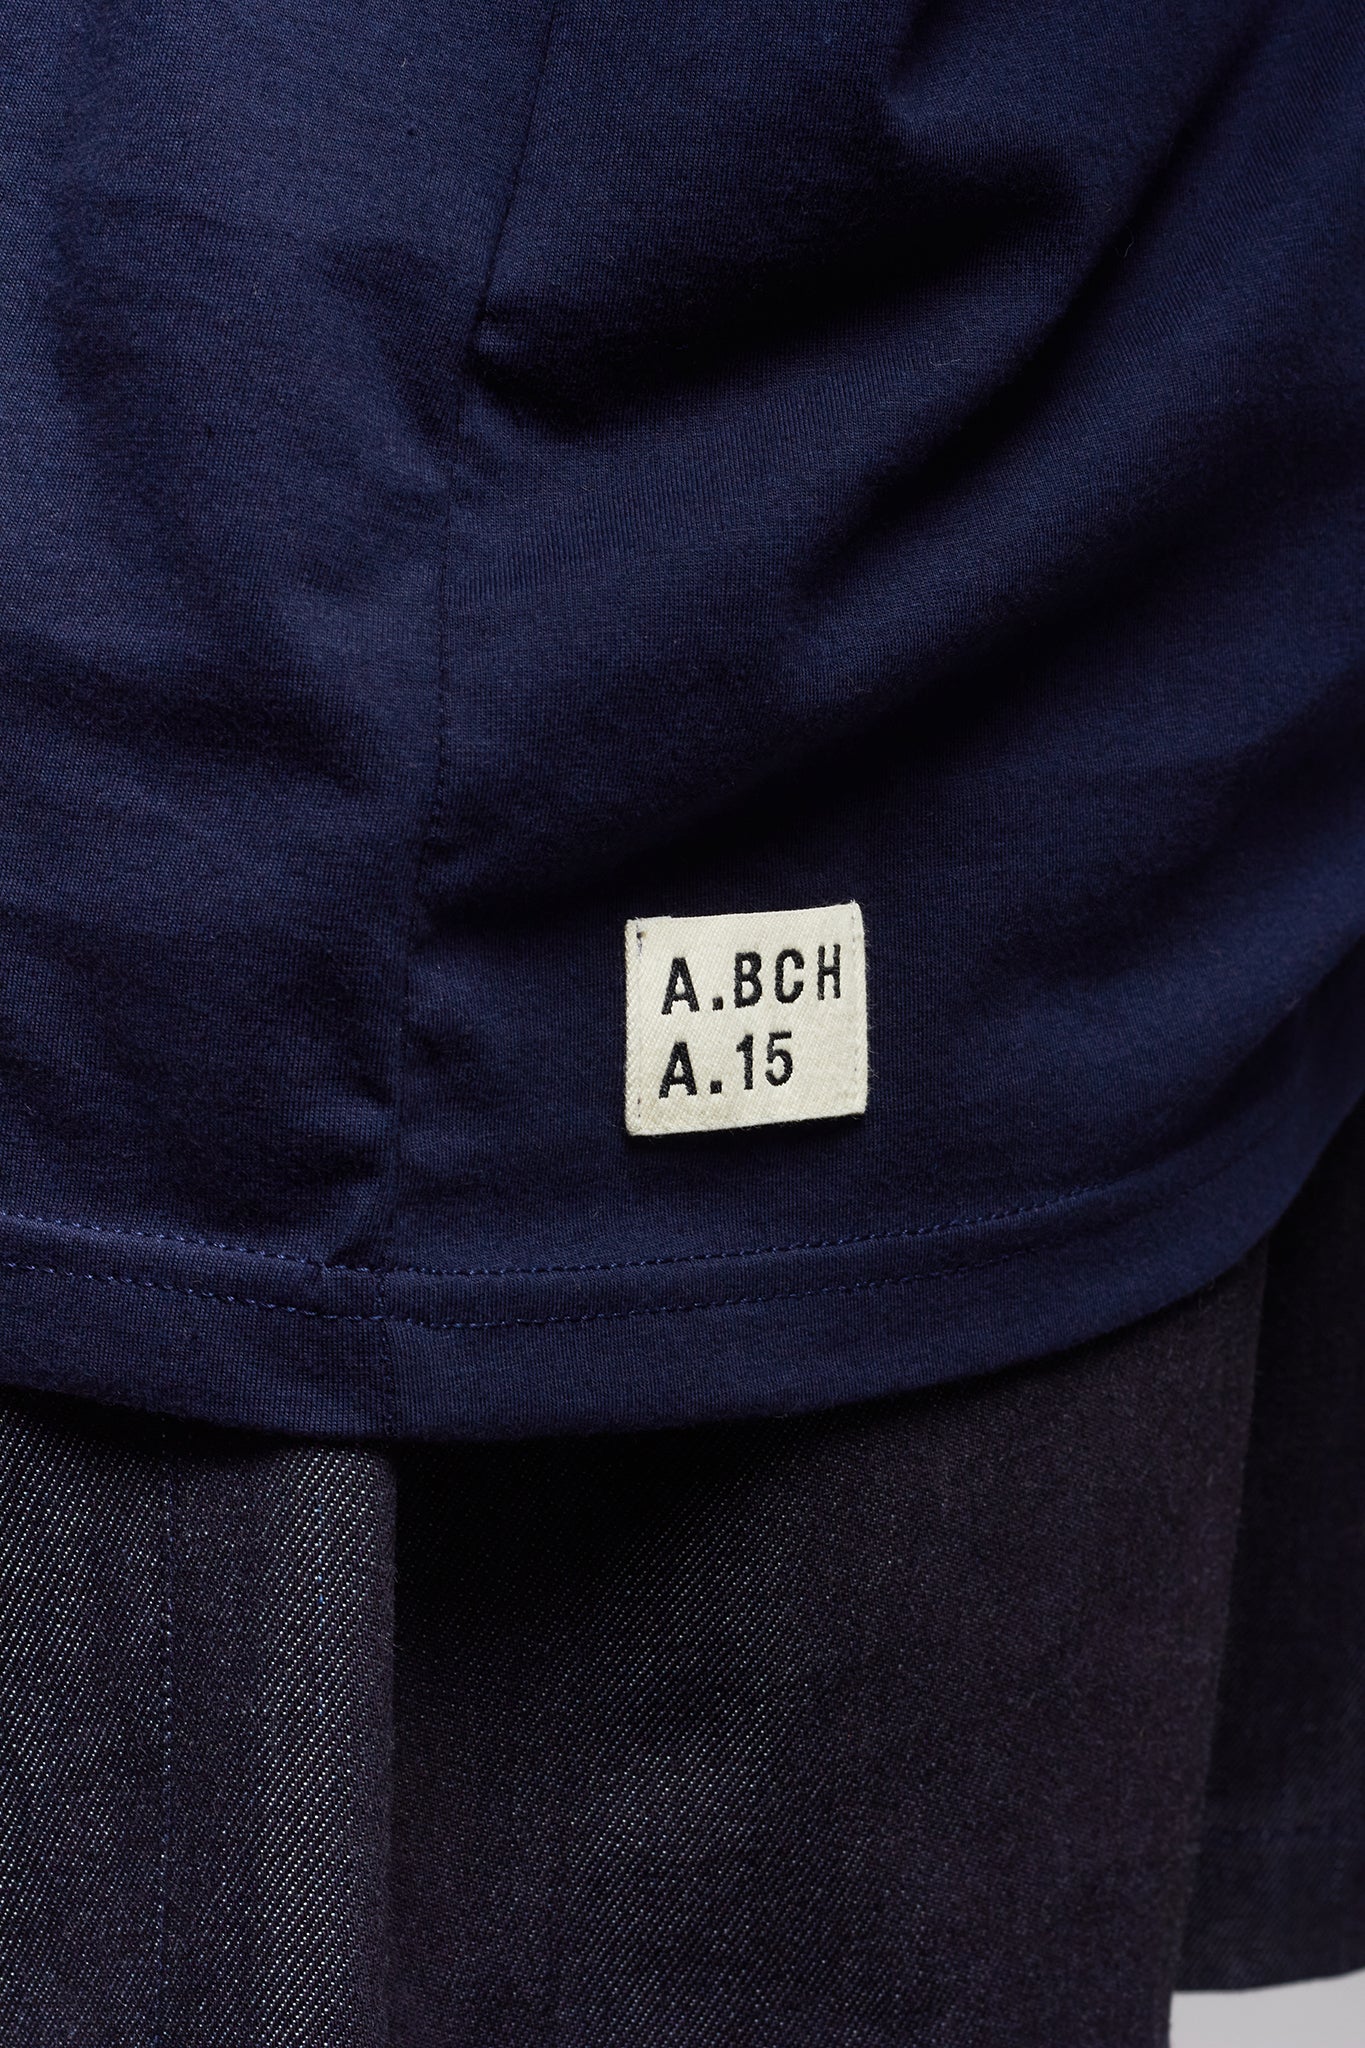 A.BCH A.15 Navy Long Line Tshirt in Organic Cotton